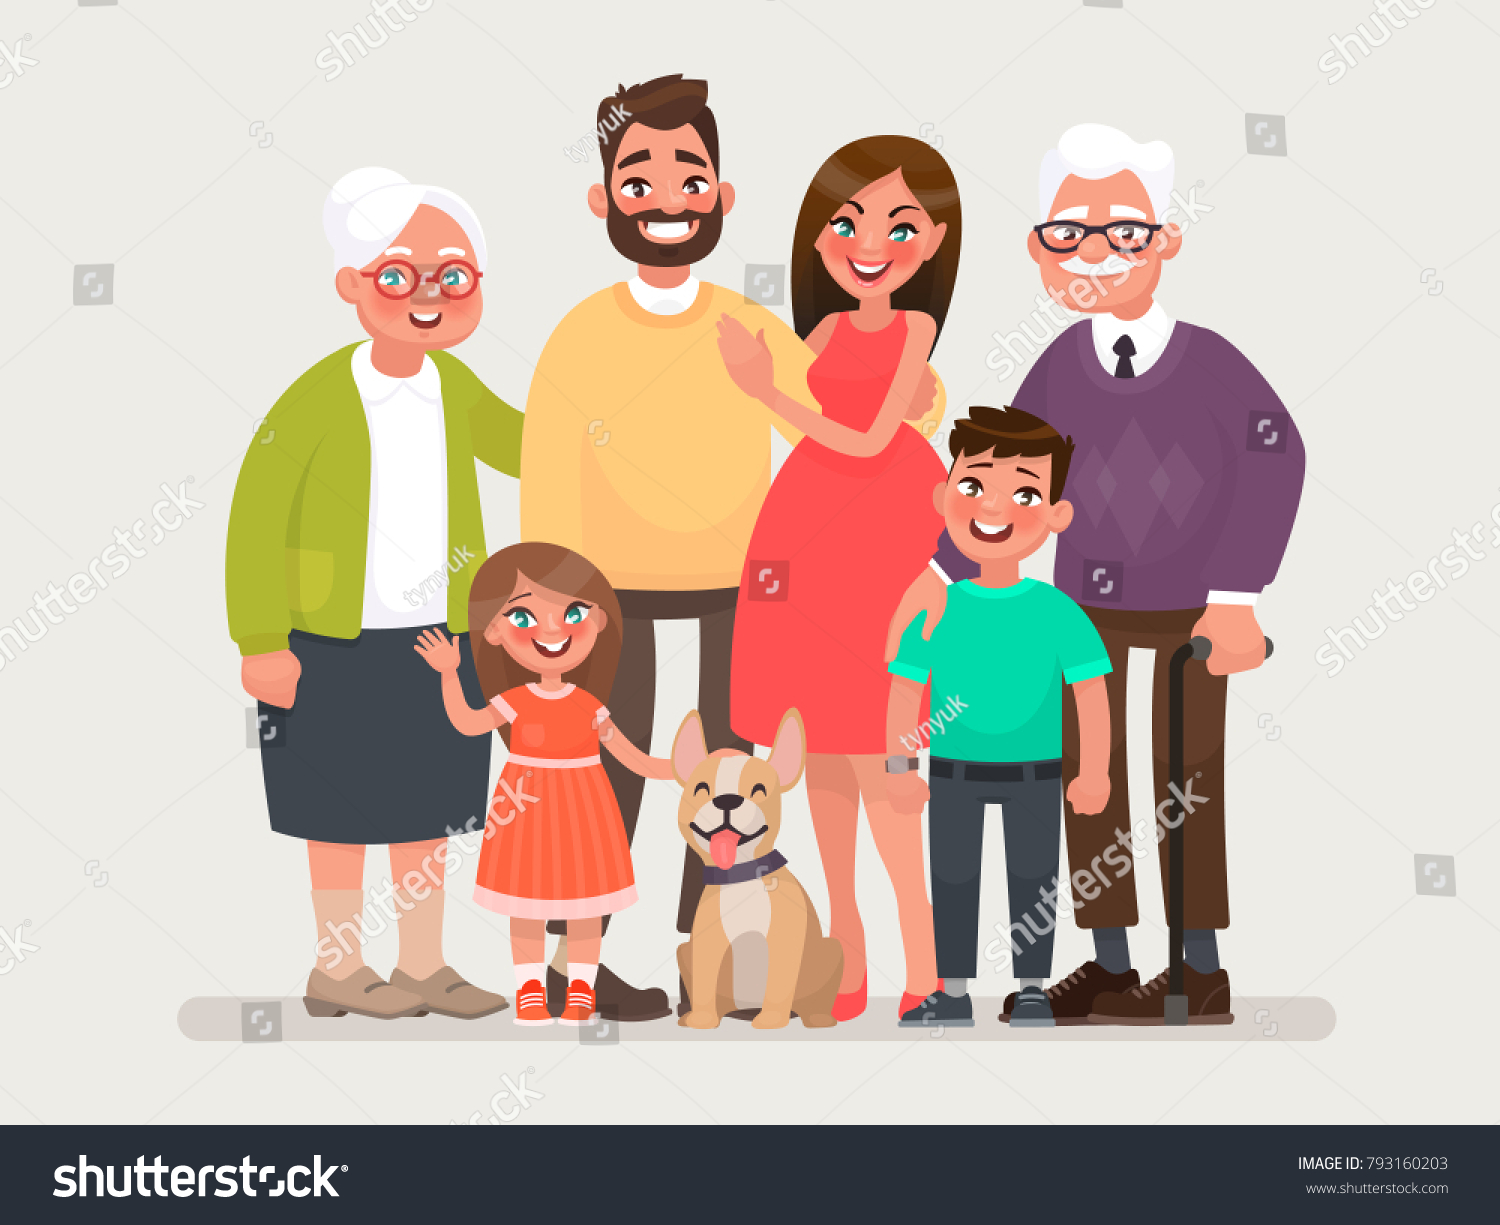 Дедушка сестренка. Семья мама папа бабушка дедушка. Семья с бабушкой и дедушкой. Семья мультяшные. Рисунок семьи с бабушкой и дедушкой.